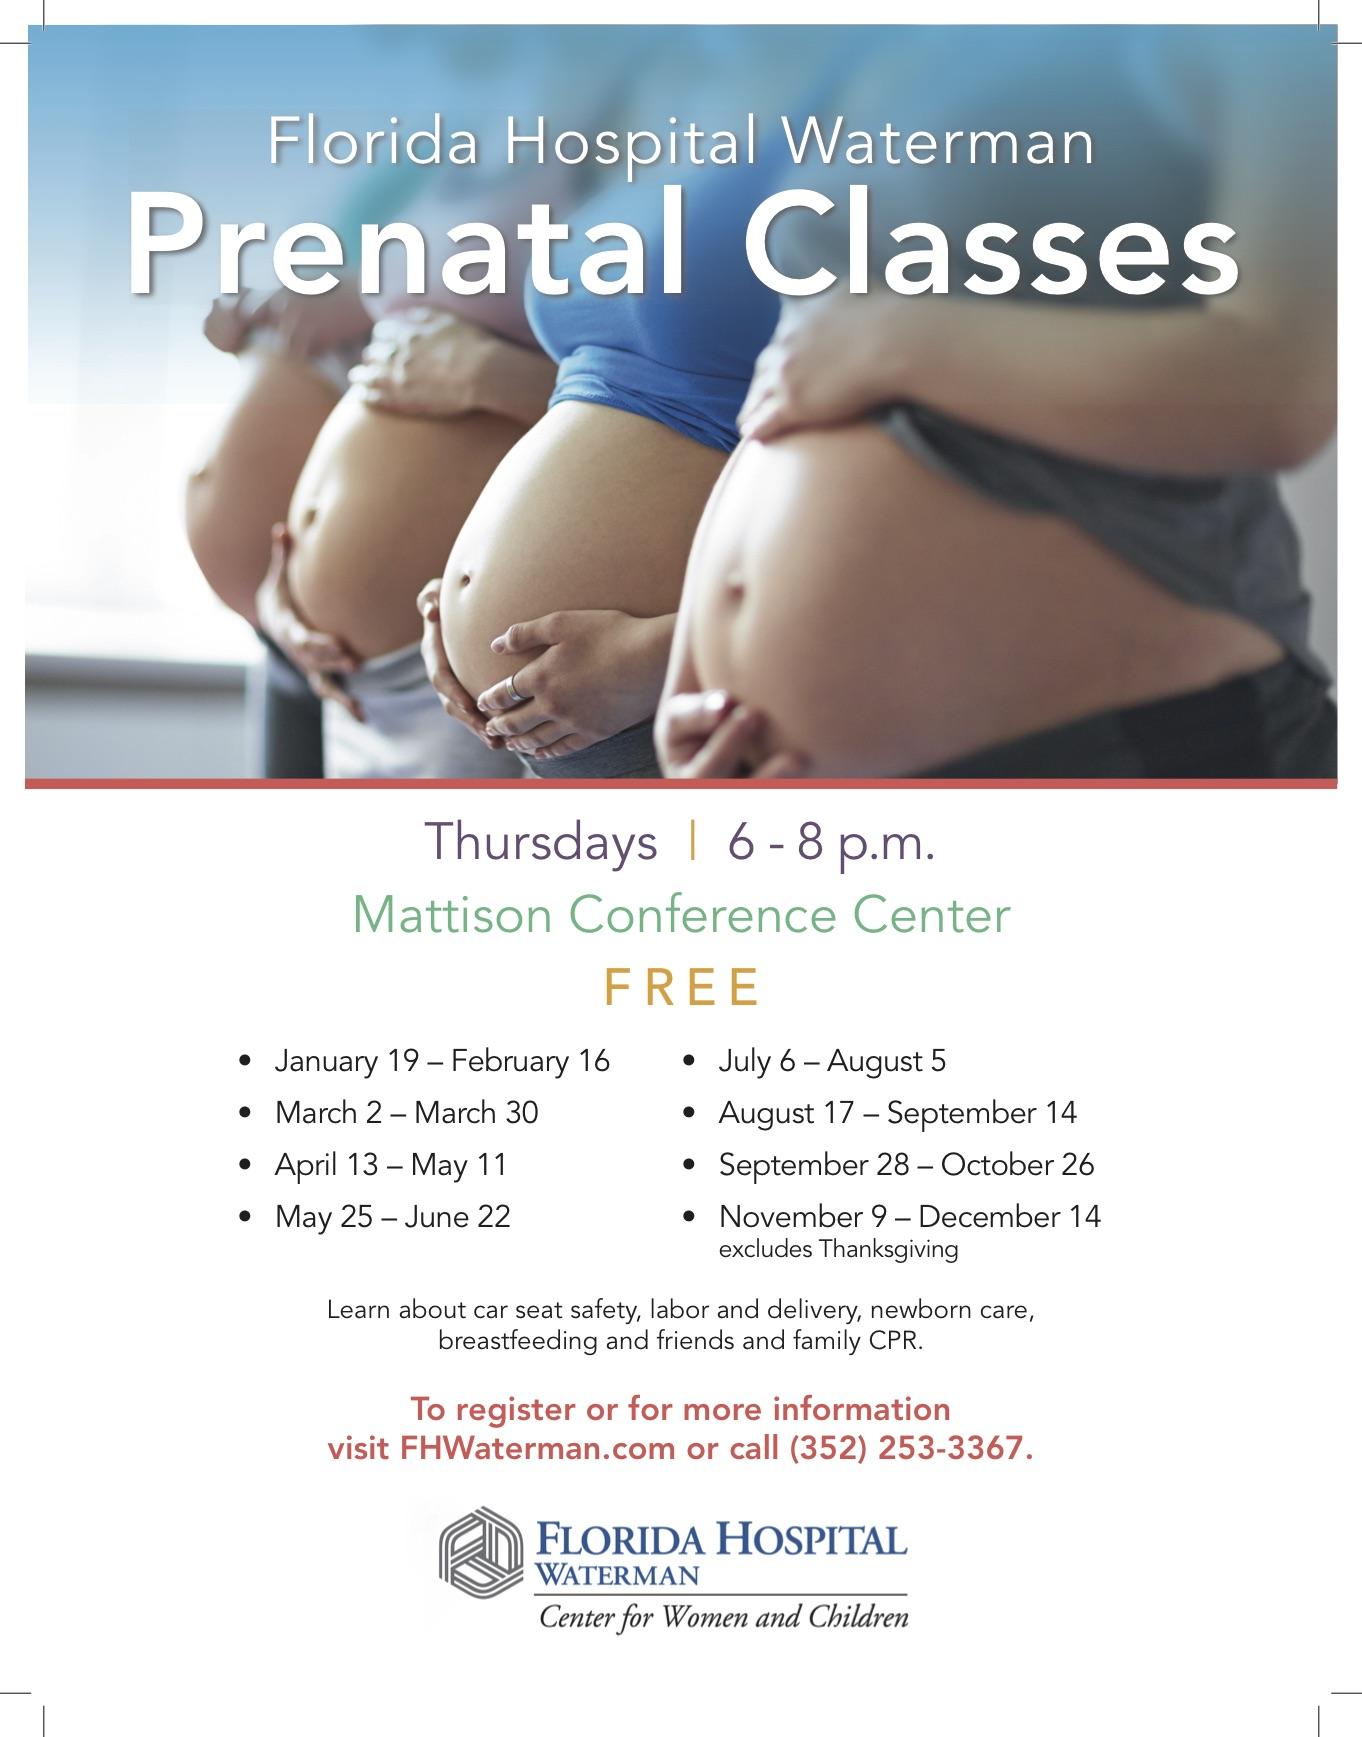 Florida Hospital Waterman Prenatal Classes - March